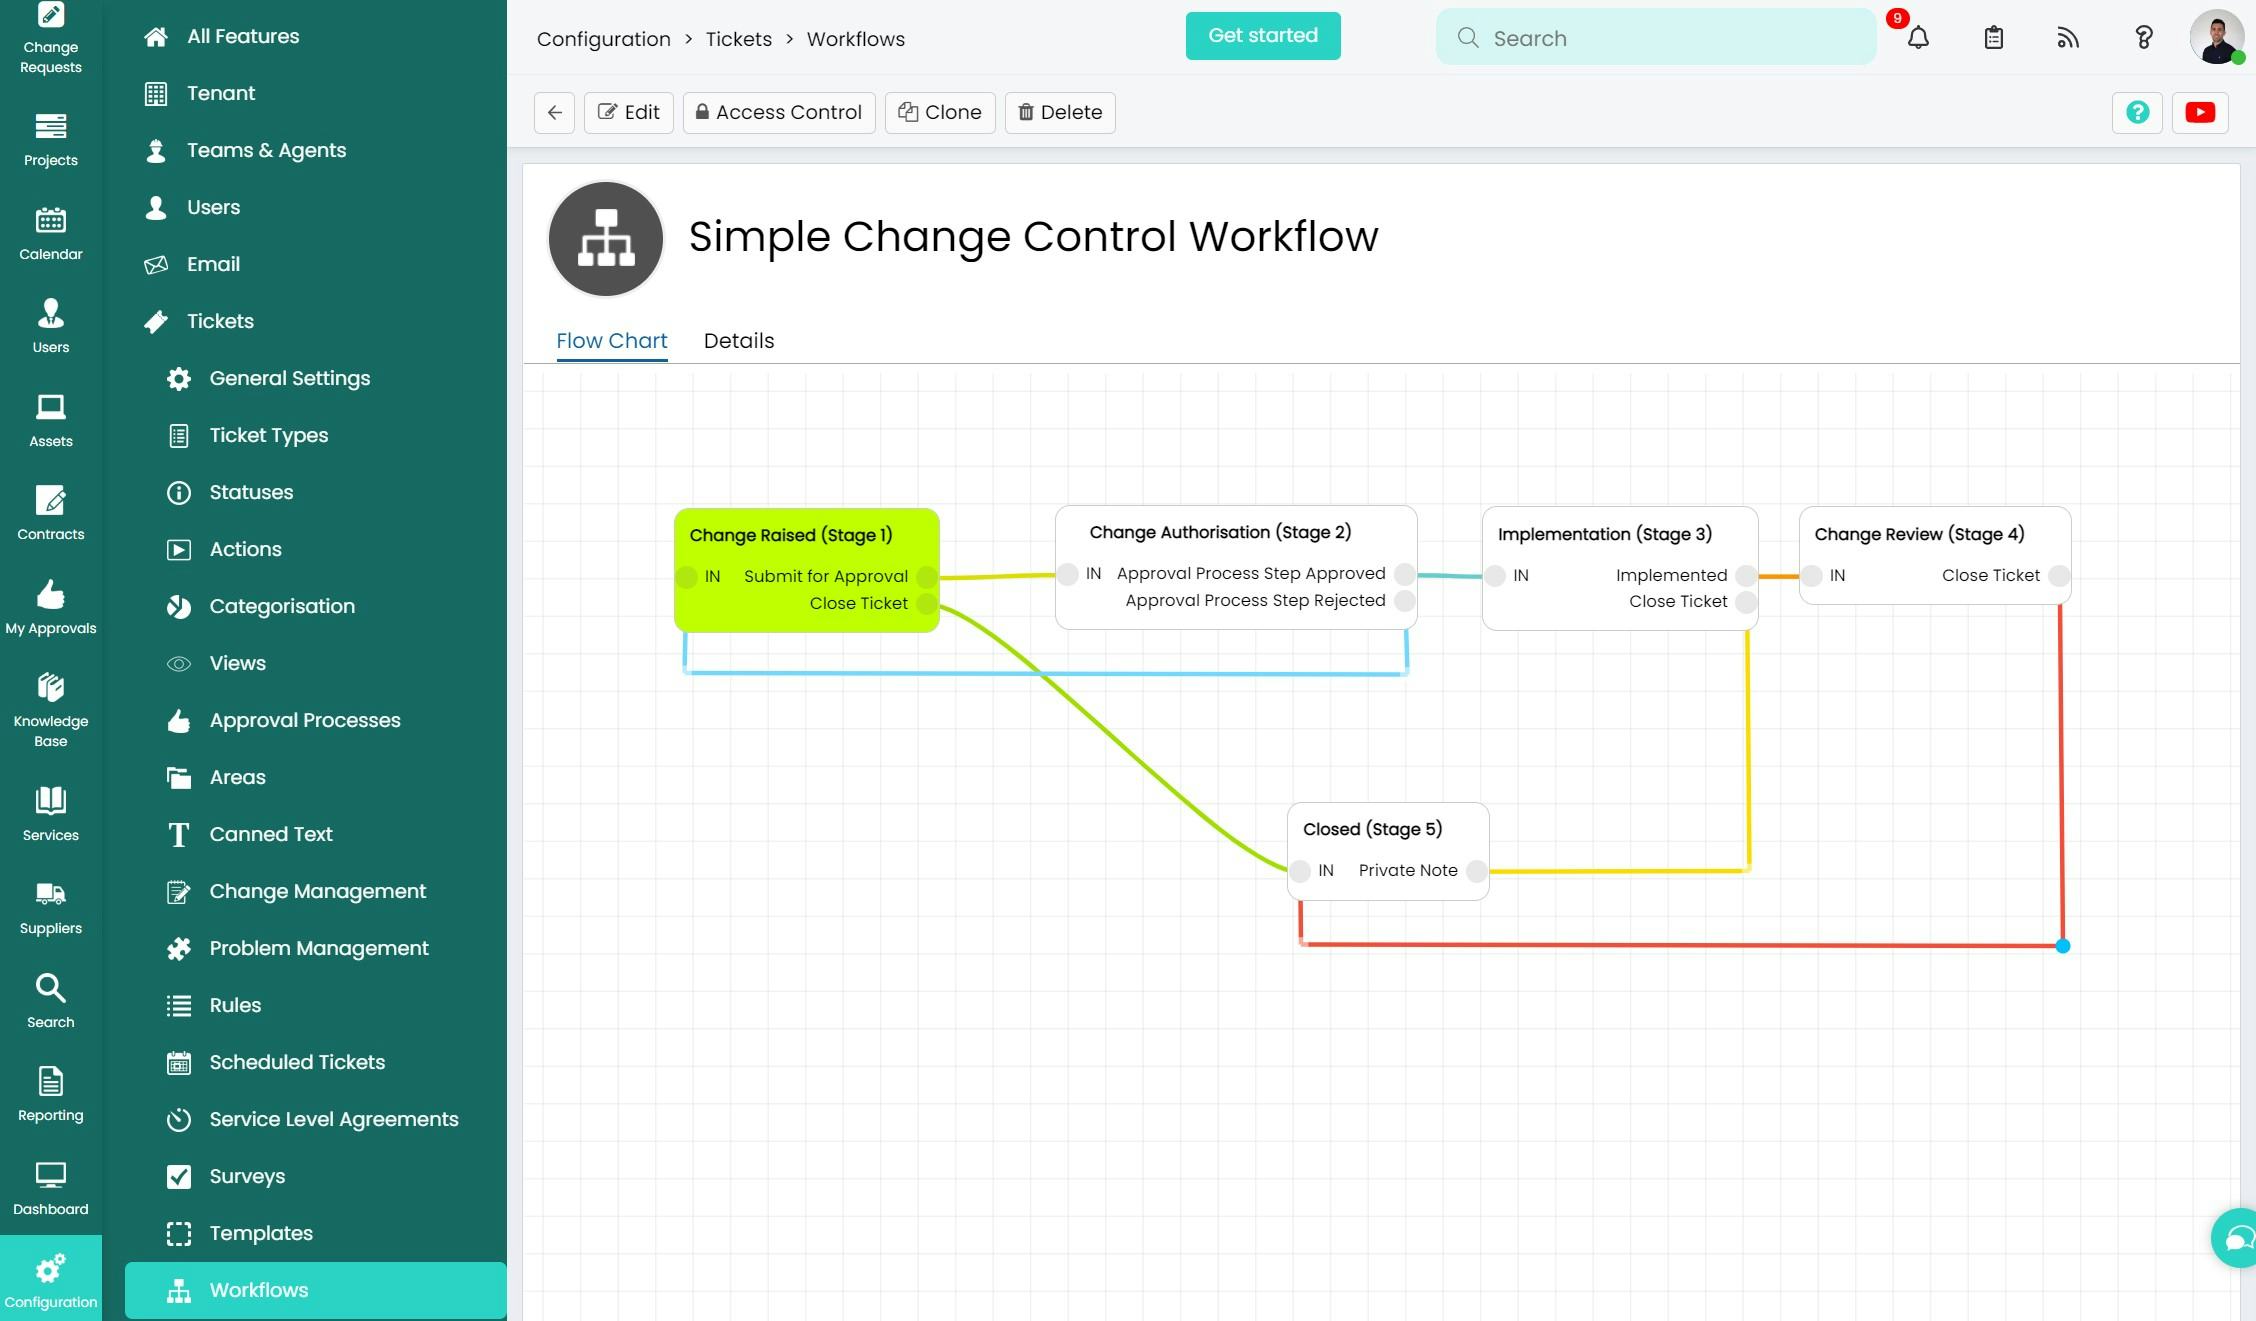 HaloITSM Software - Simple Change Control Workflow